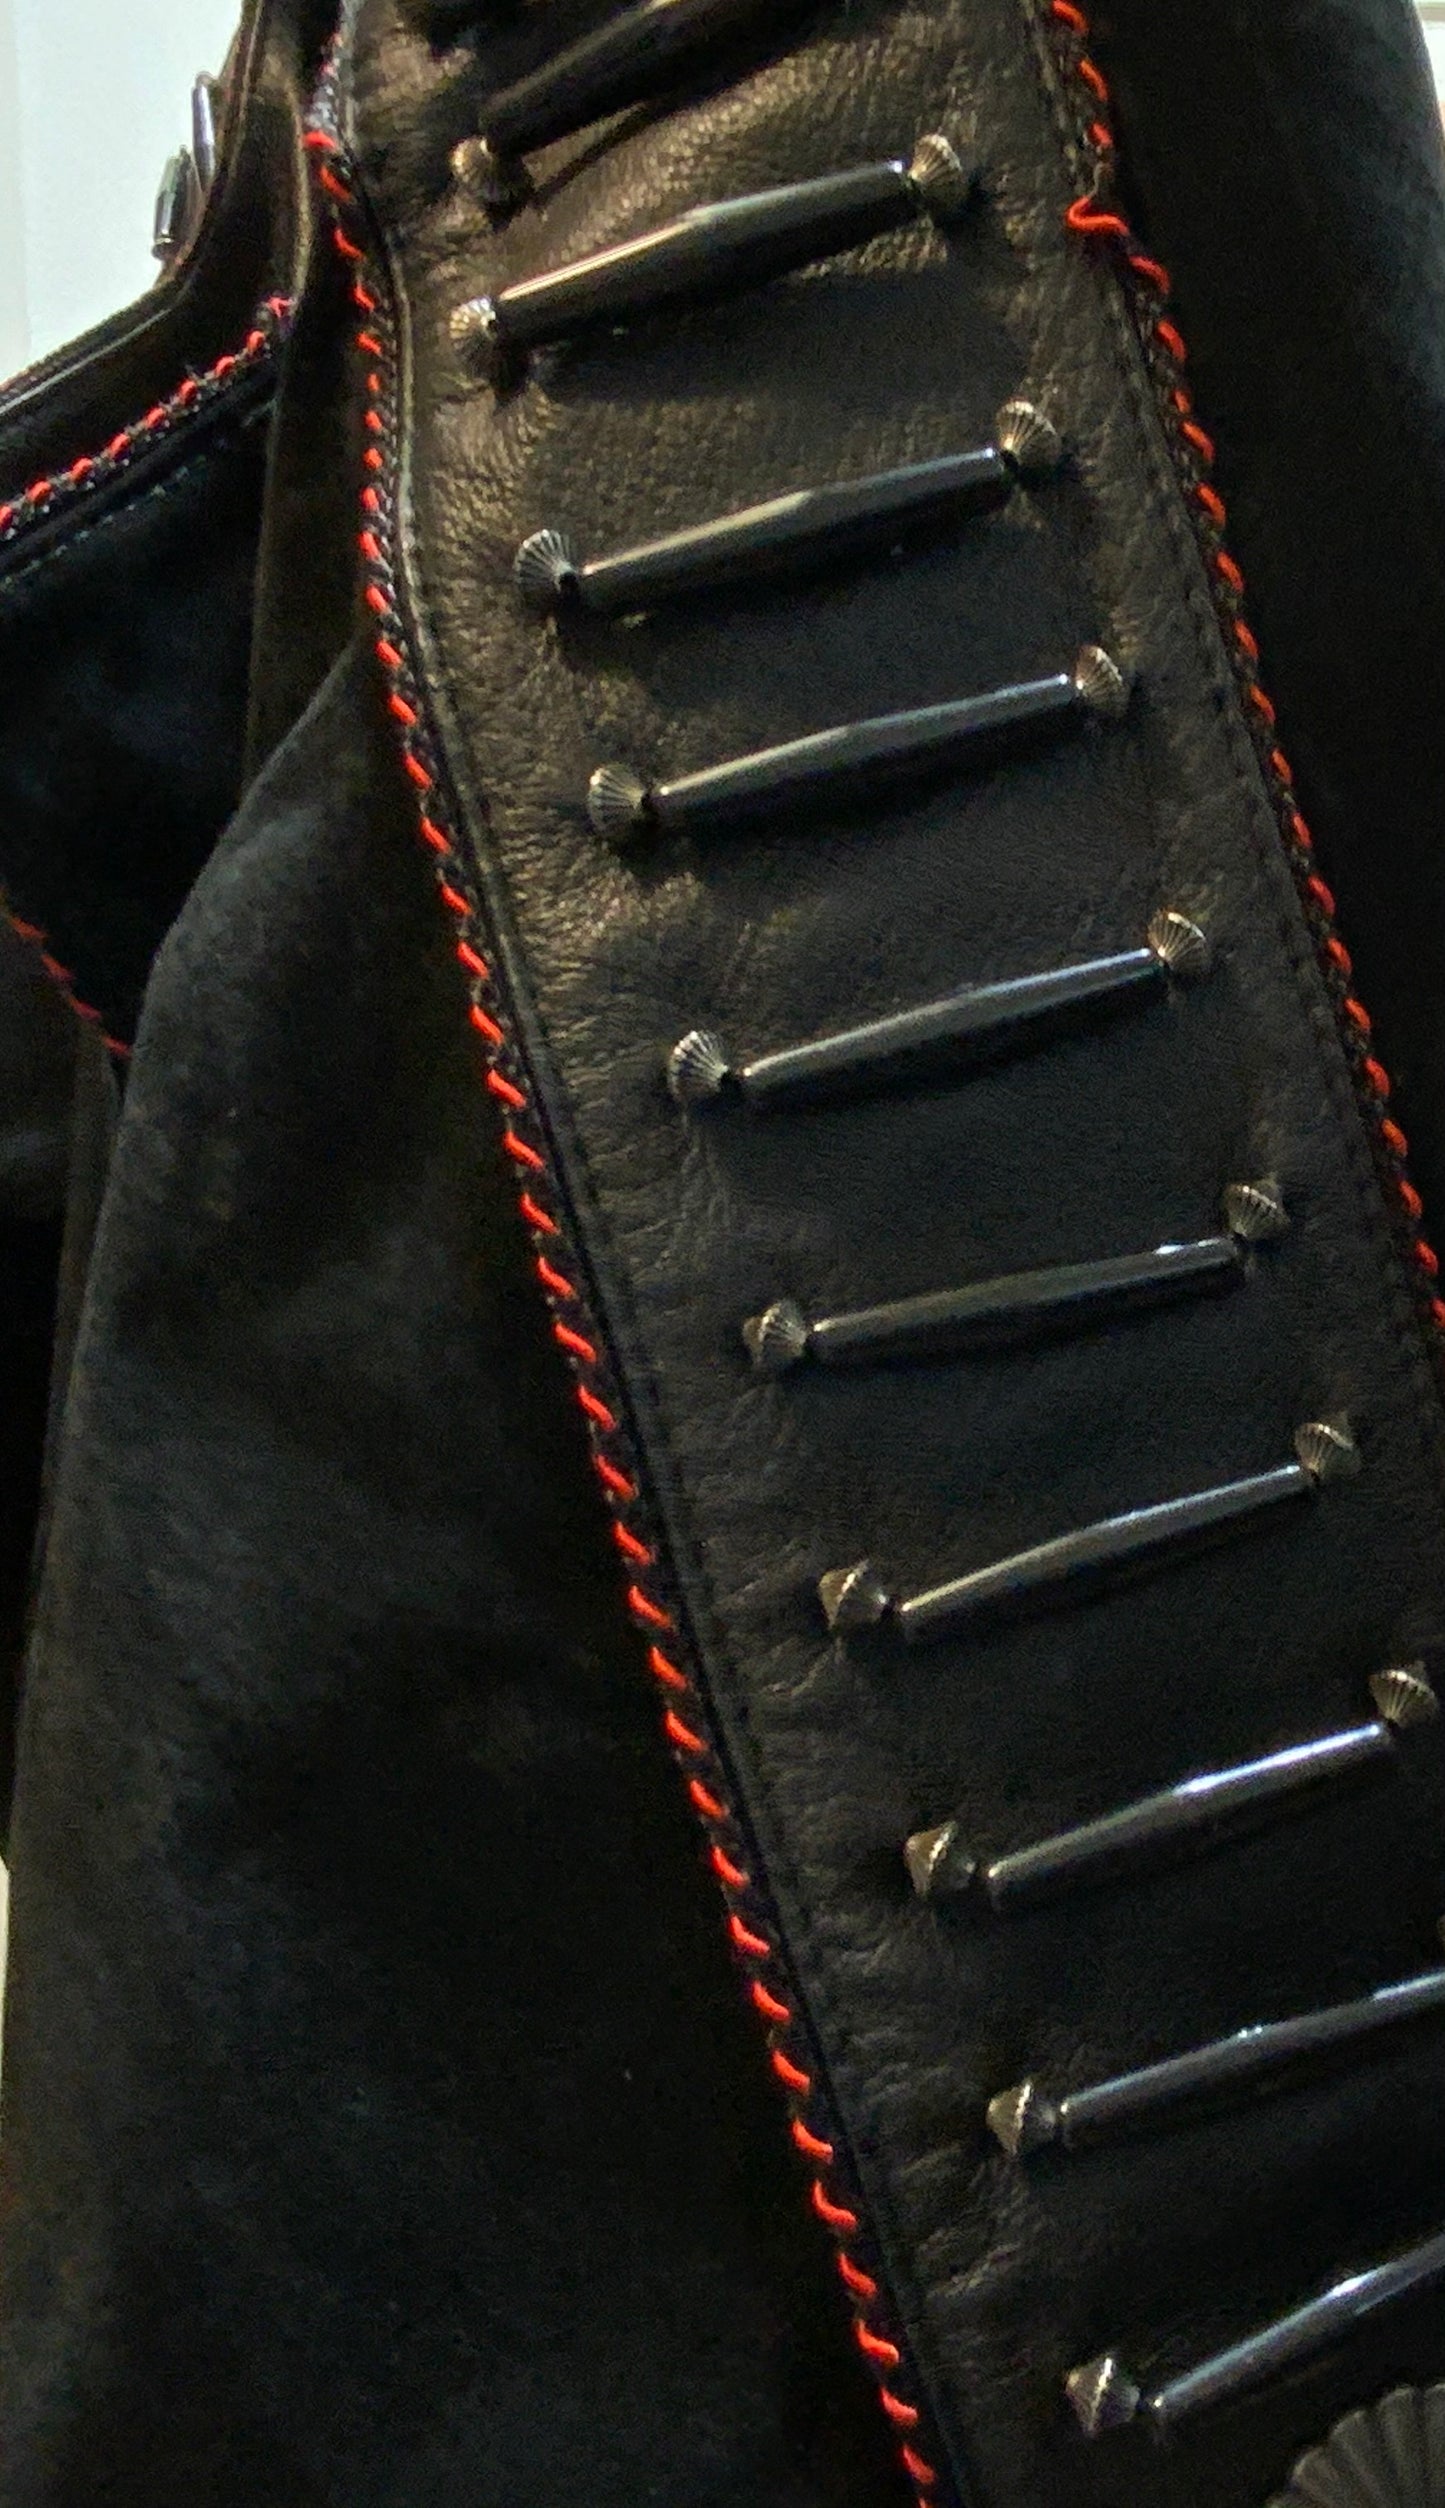 Long Vintage Black Leather Coat w/ Beaded Design